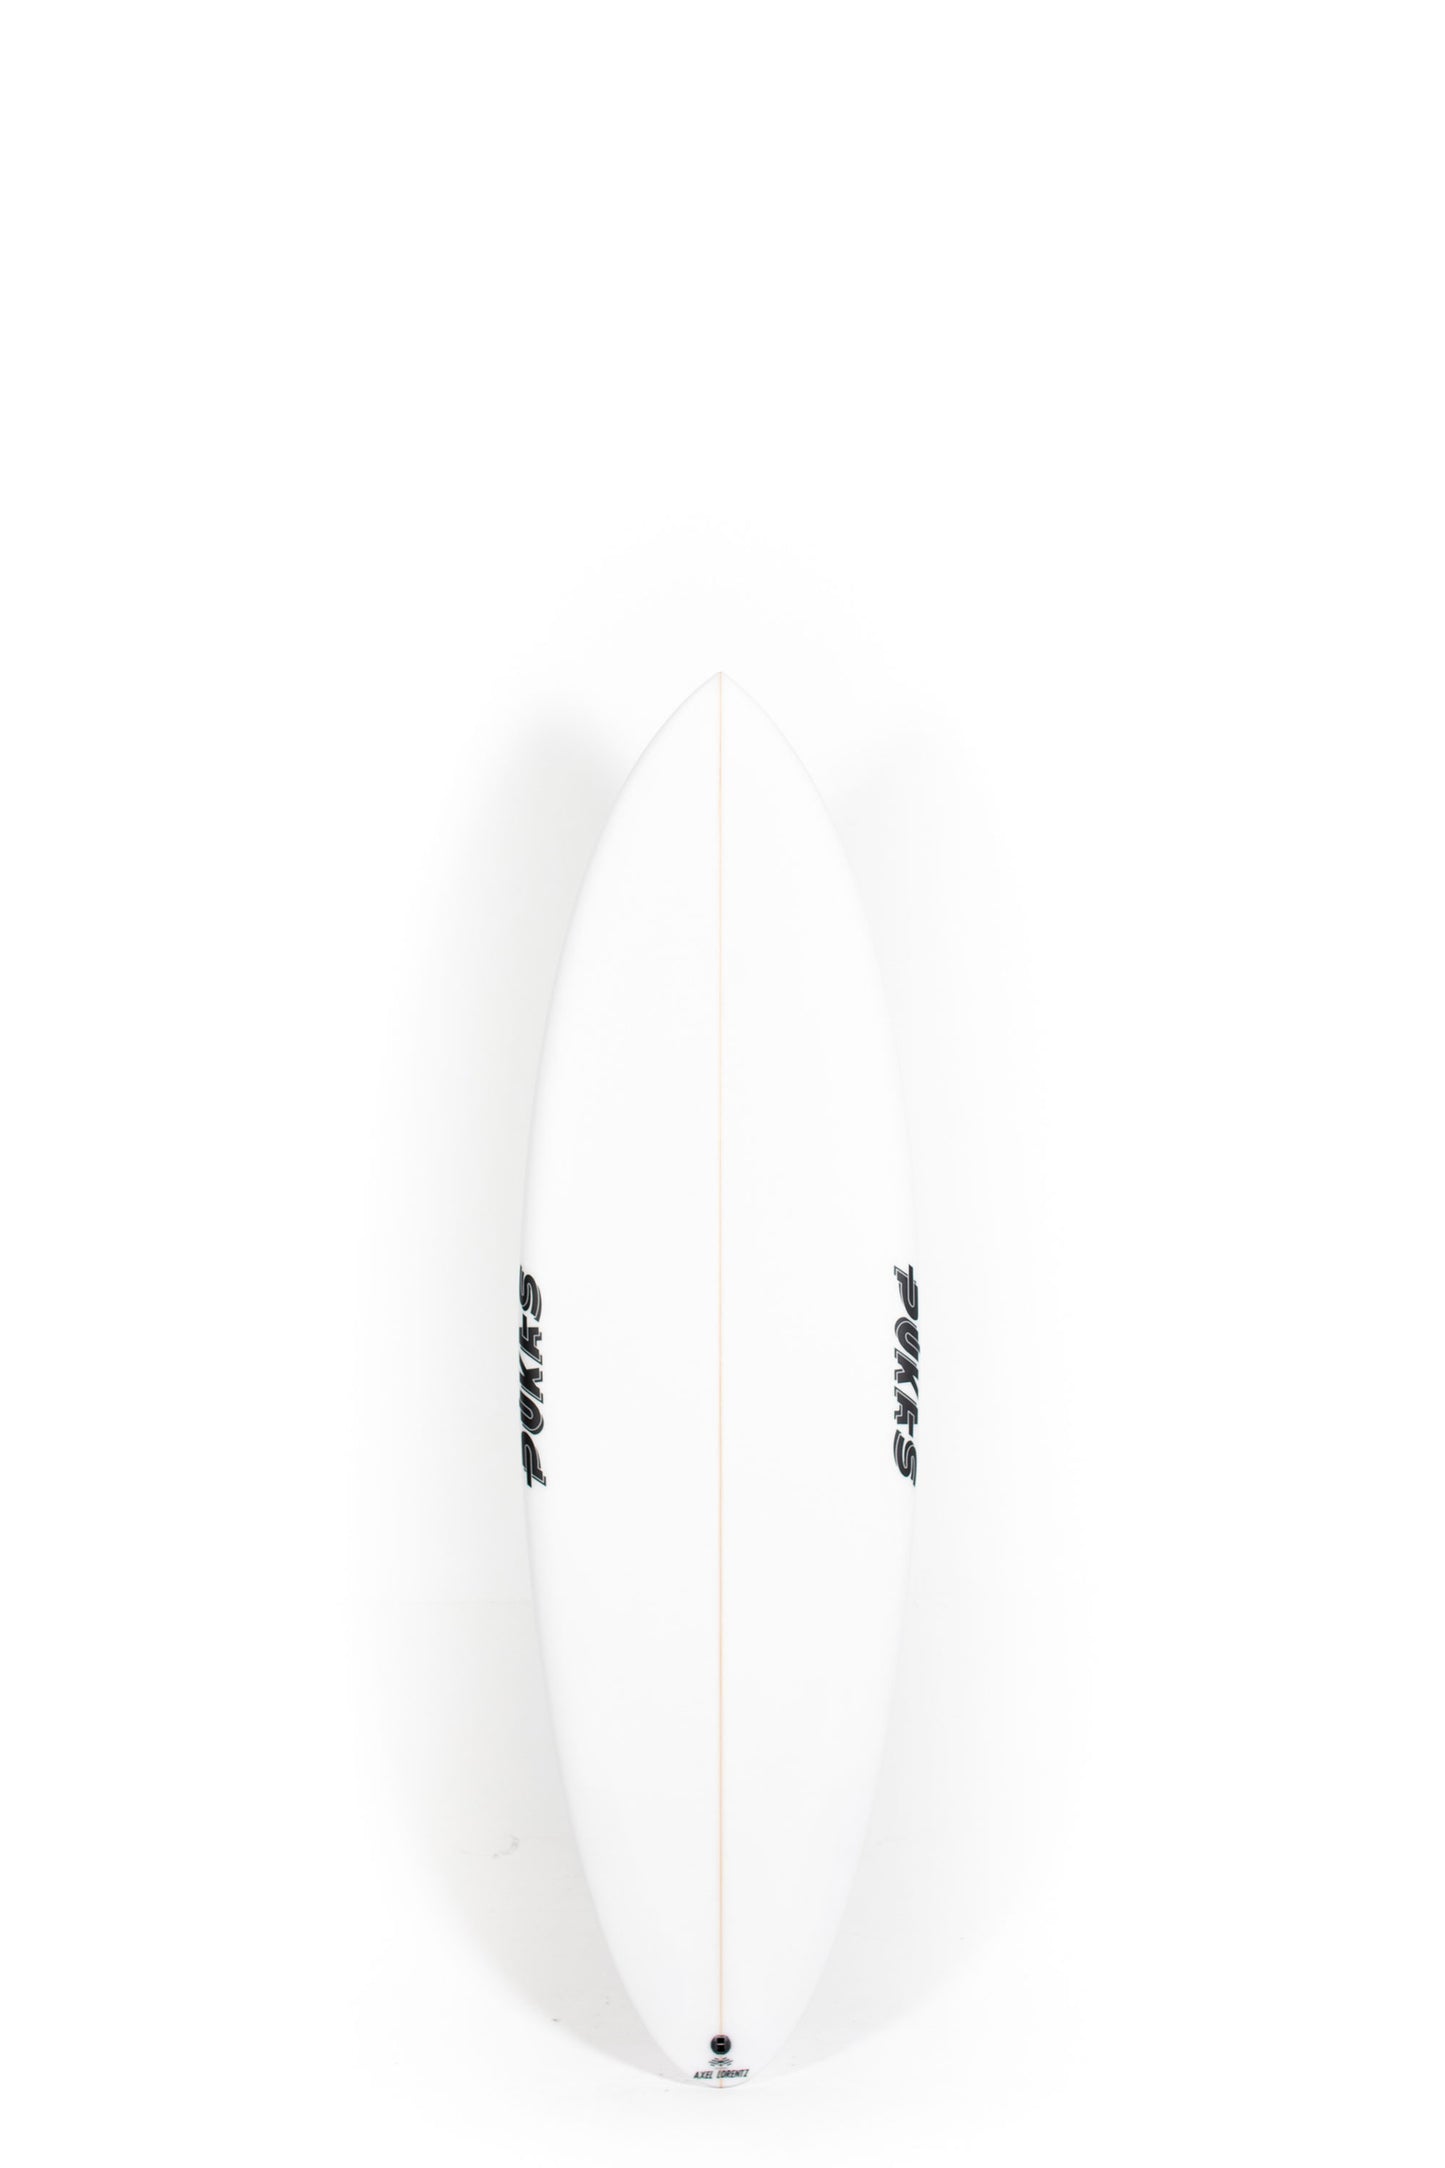 Pukas Surf Shop - Pukas Surfboard - ORIGINAL 69 by Axel Lorentz - 6’2” x 21,25 x 2,75 - 39,36L - AX0967